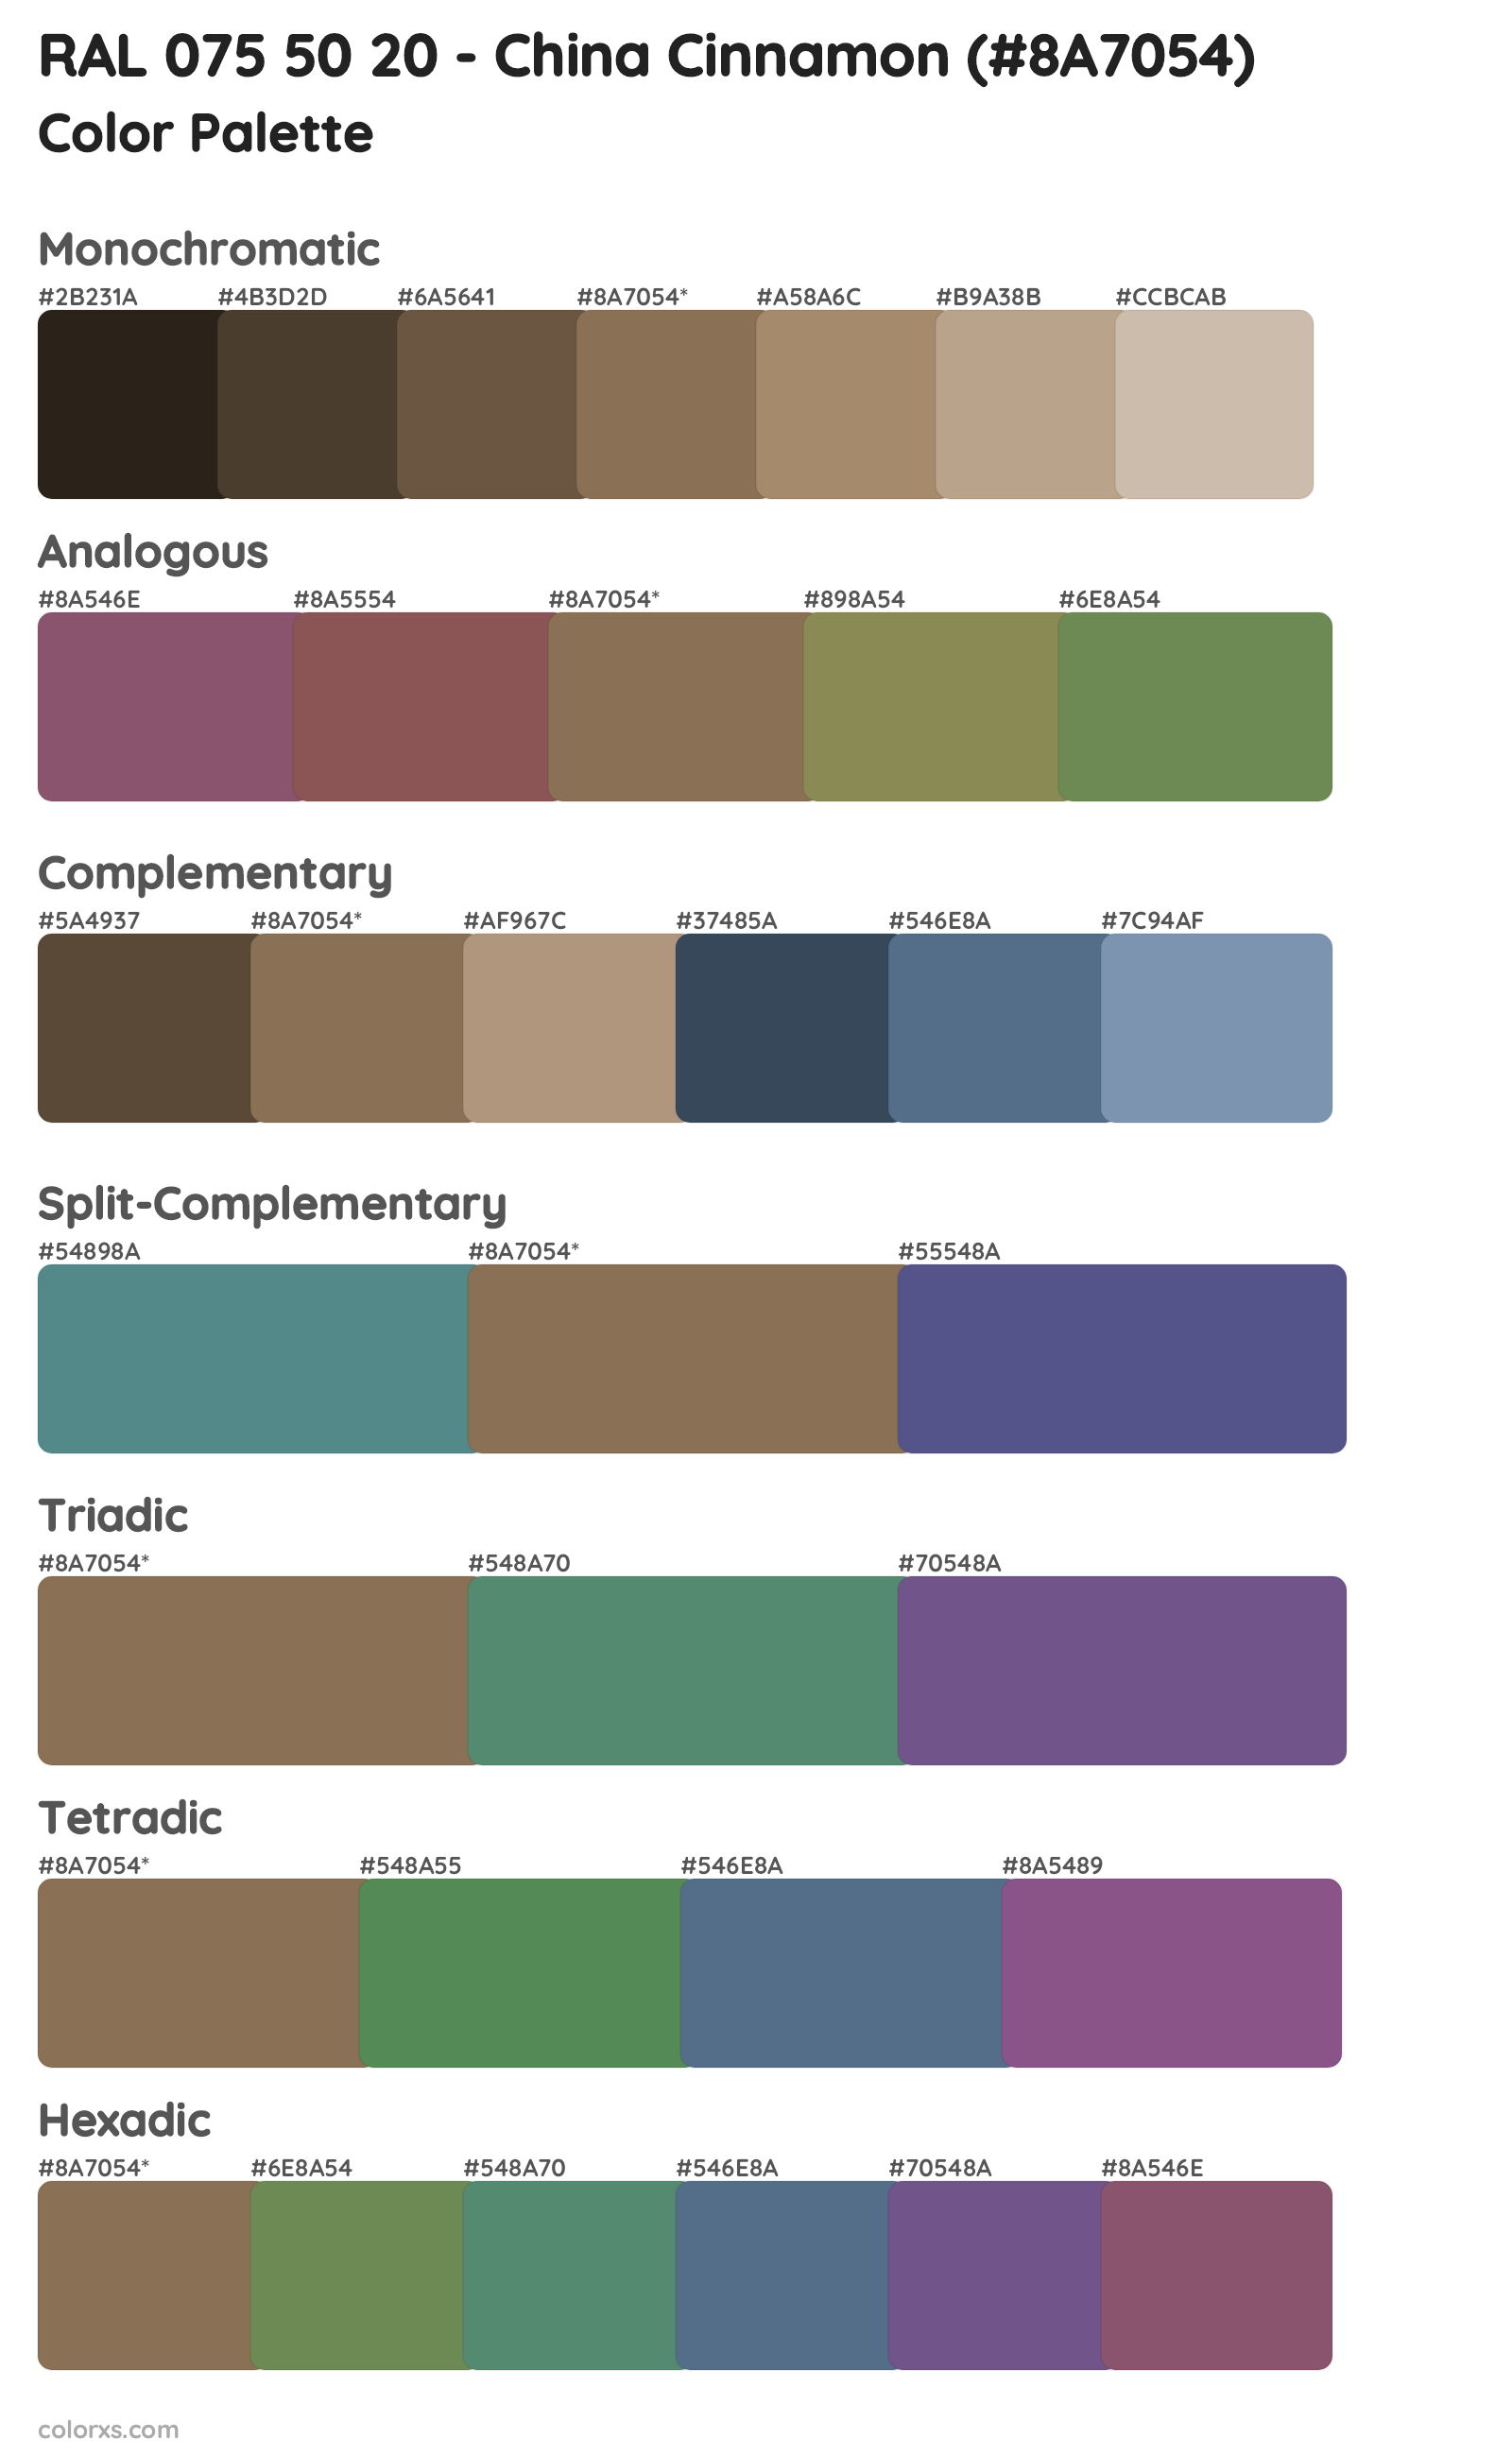 RAL 075 50 20 - China Cinnamon Color Scheme Palettes